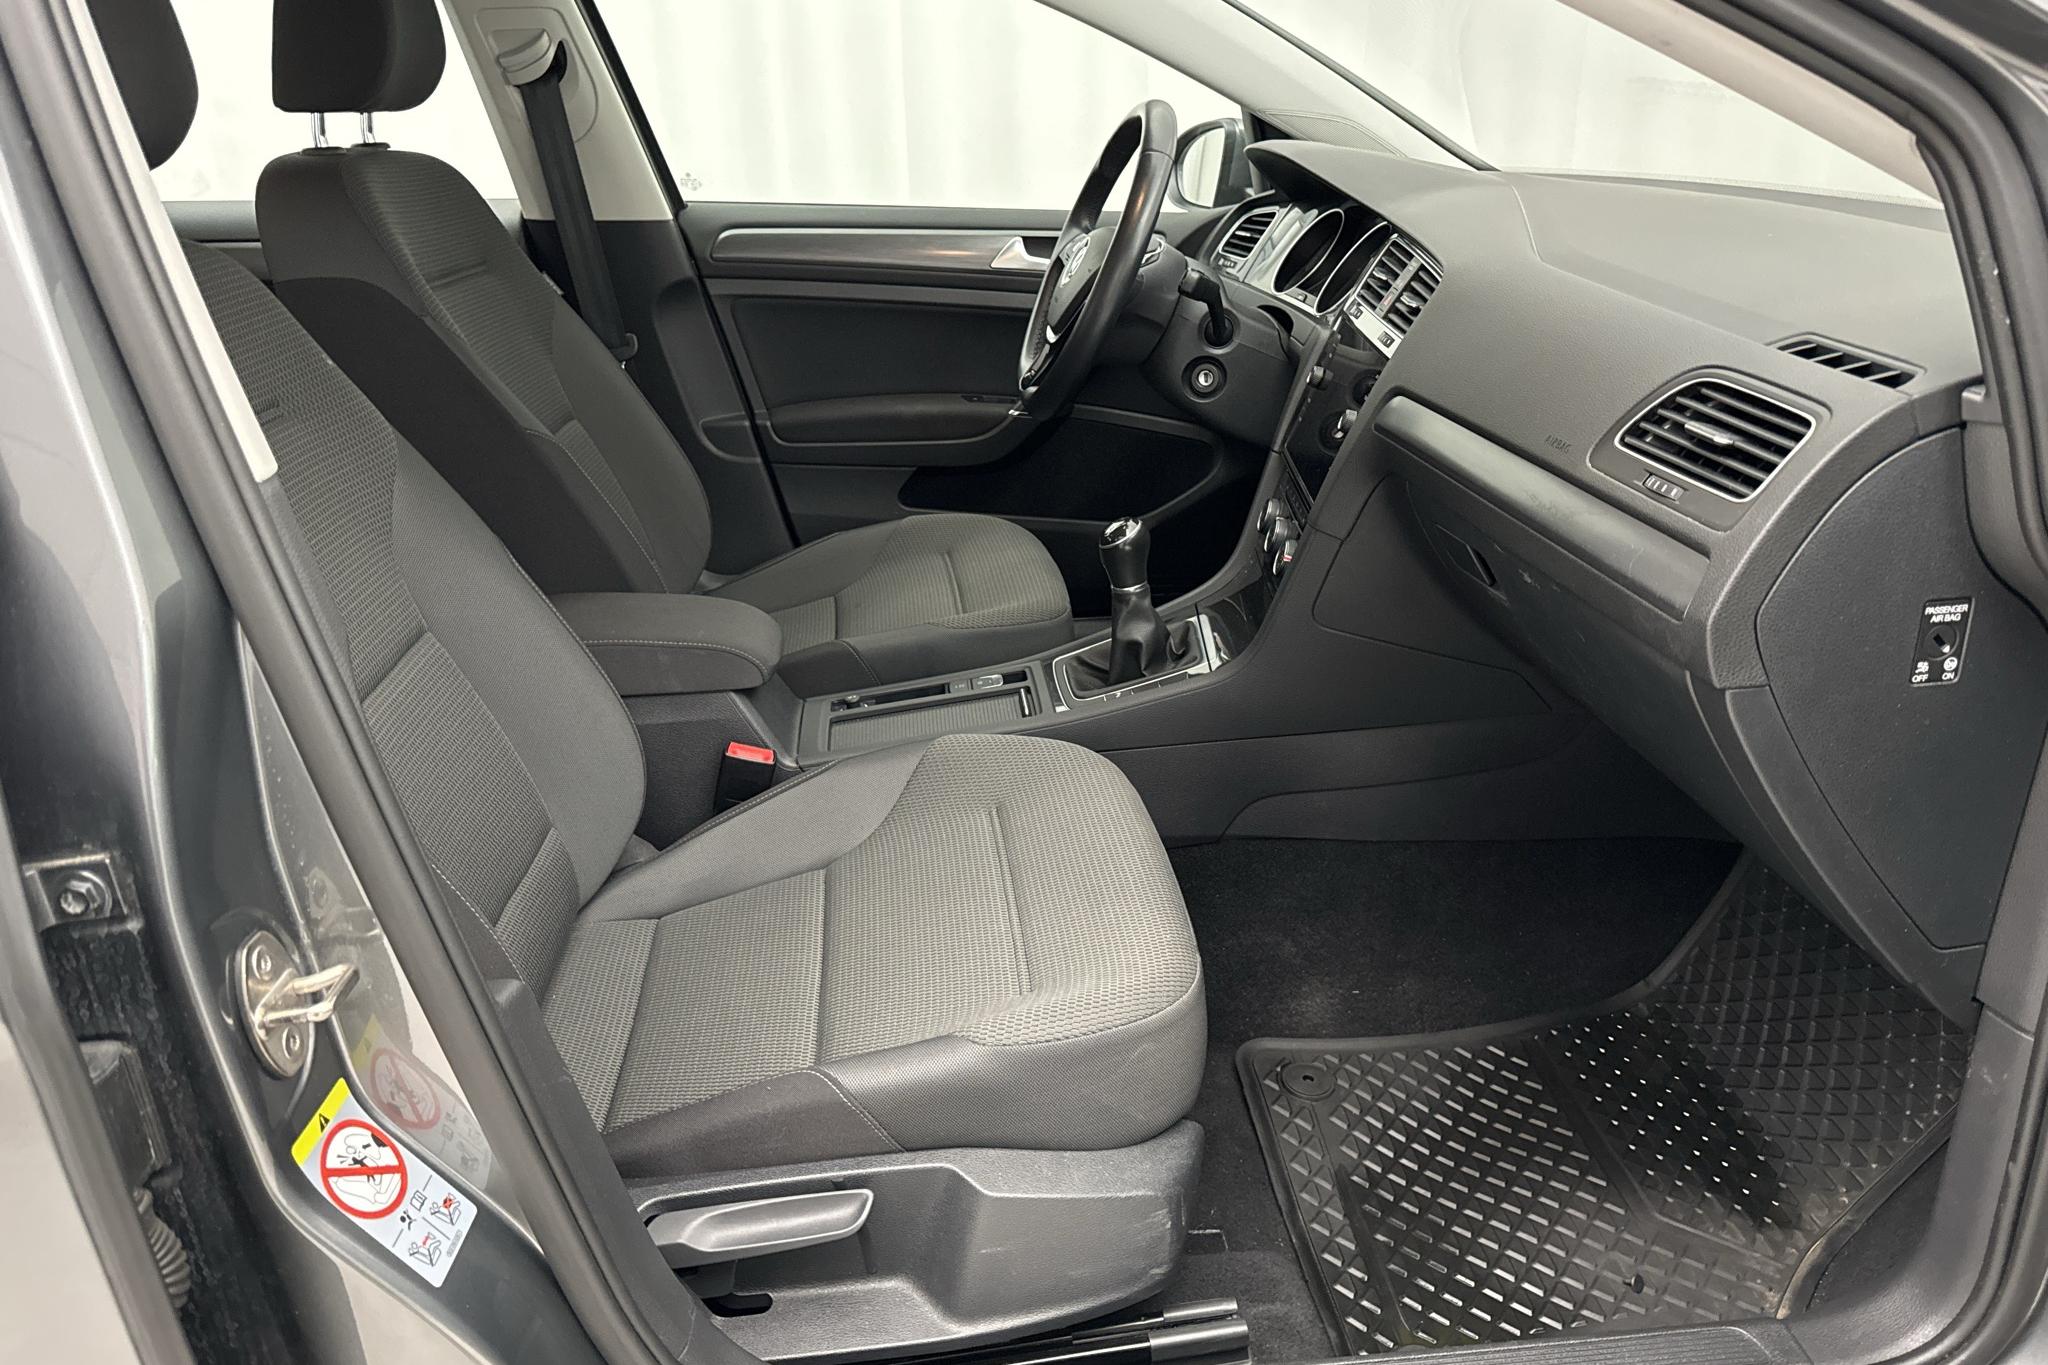 VW Golf VII 1.0 TSI 5dr (115hk) - 7 052 mil - Manuell - Dark Grey - 2019